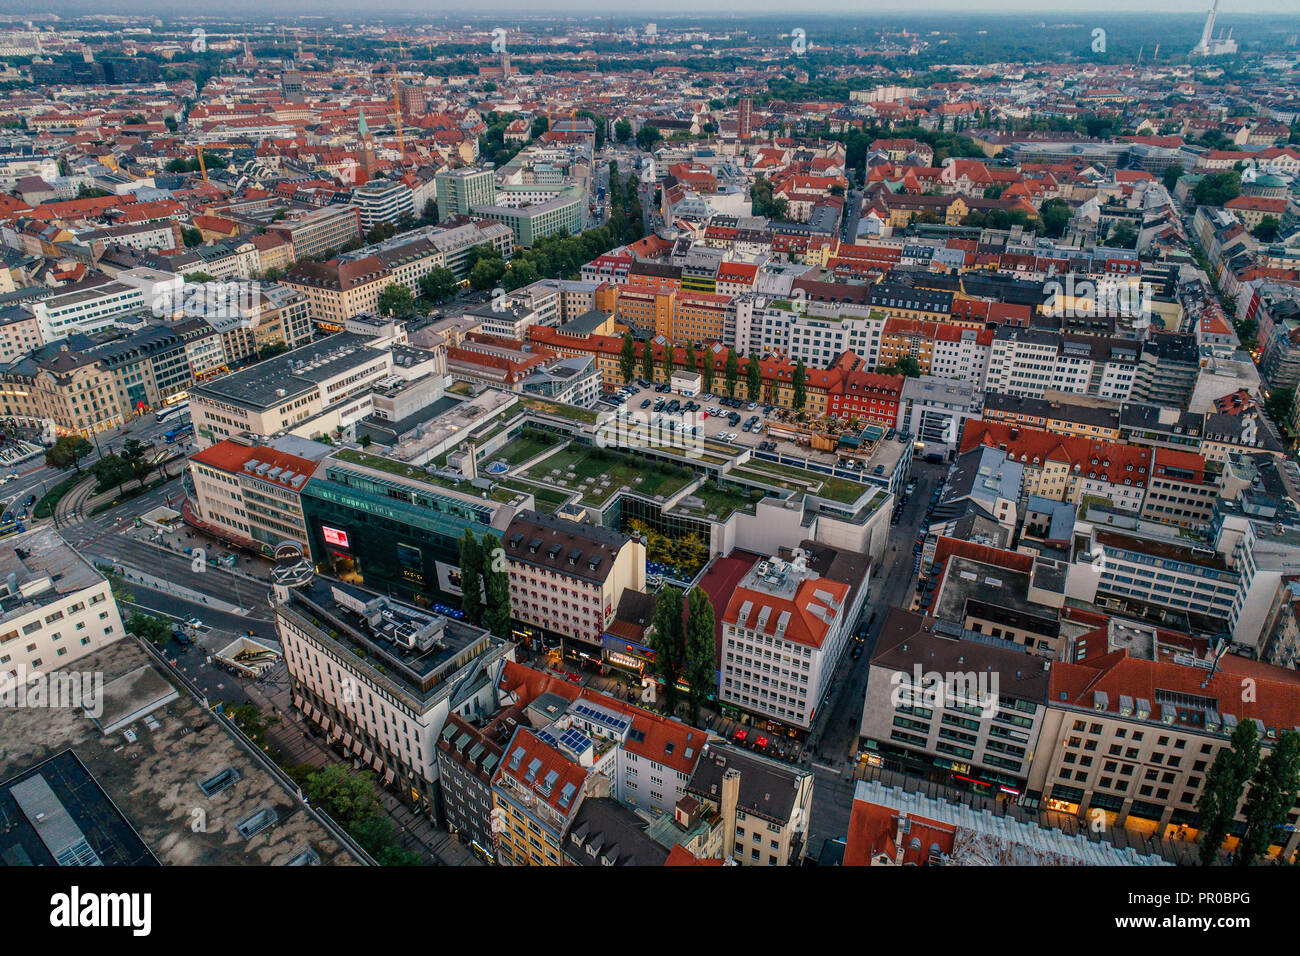 Munich city center Air drone view summer urban photo Stock Photo - Alamy